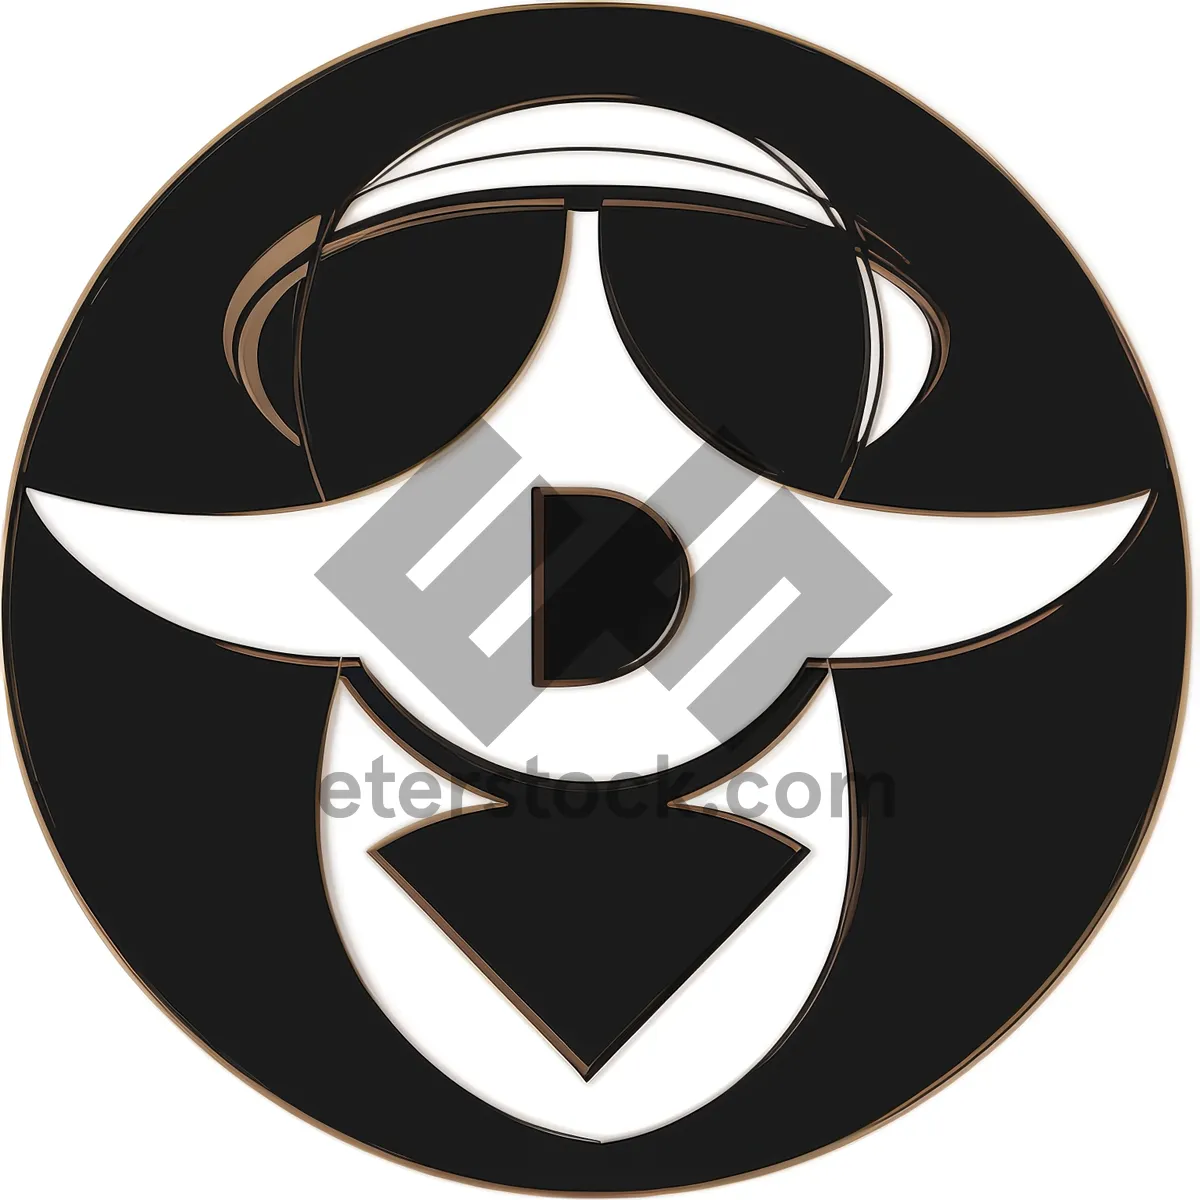 Picture of Dangerous Poison Pirate Icon: Black Round Hazard Symbol